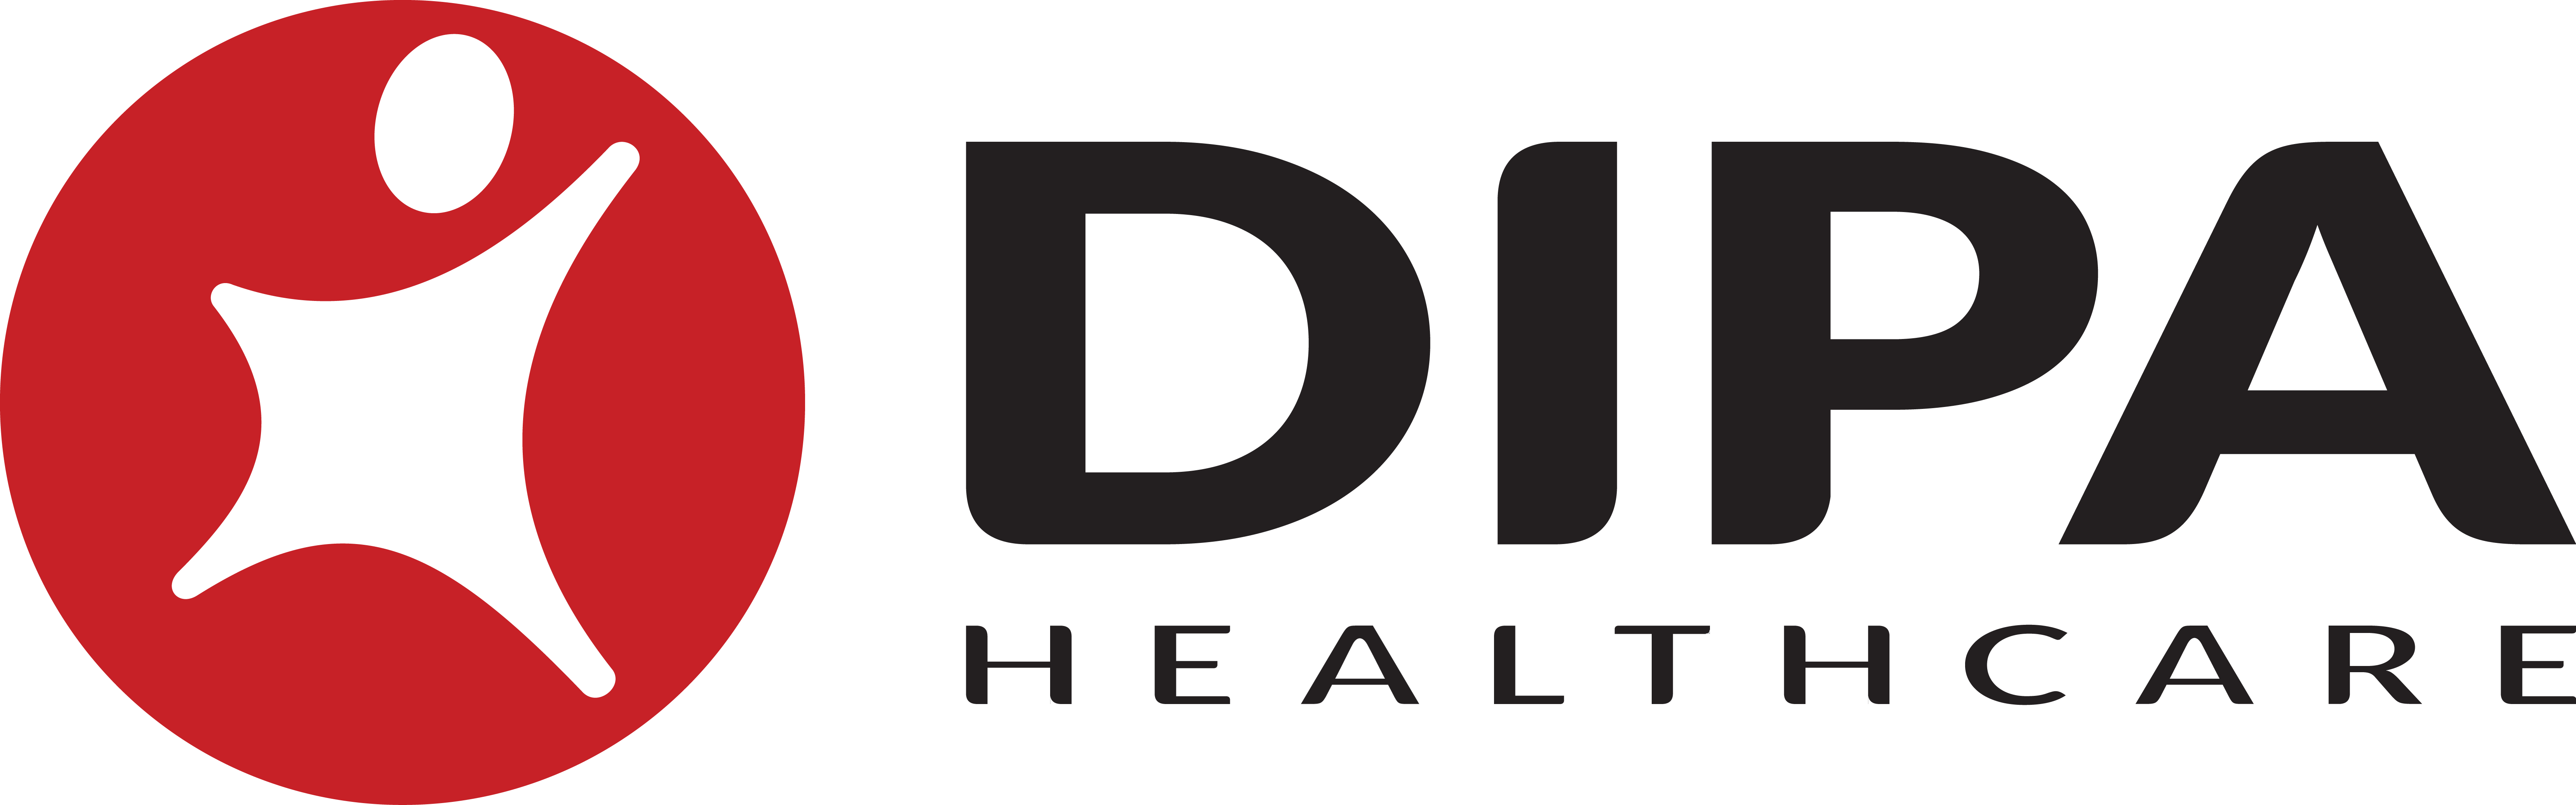 DIPA Healthcare